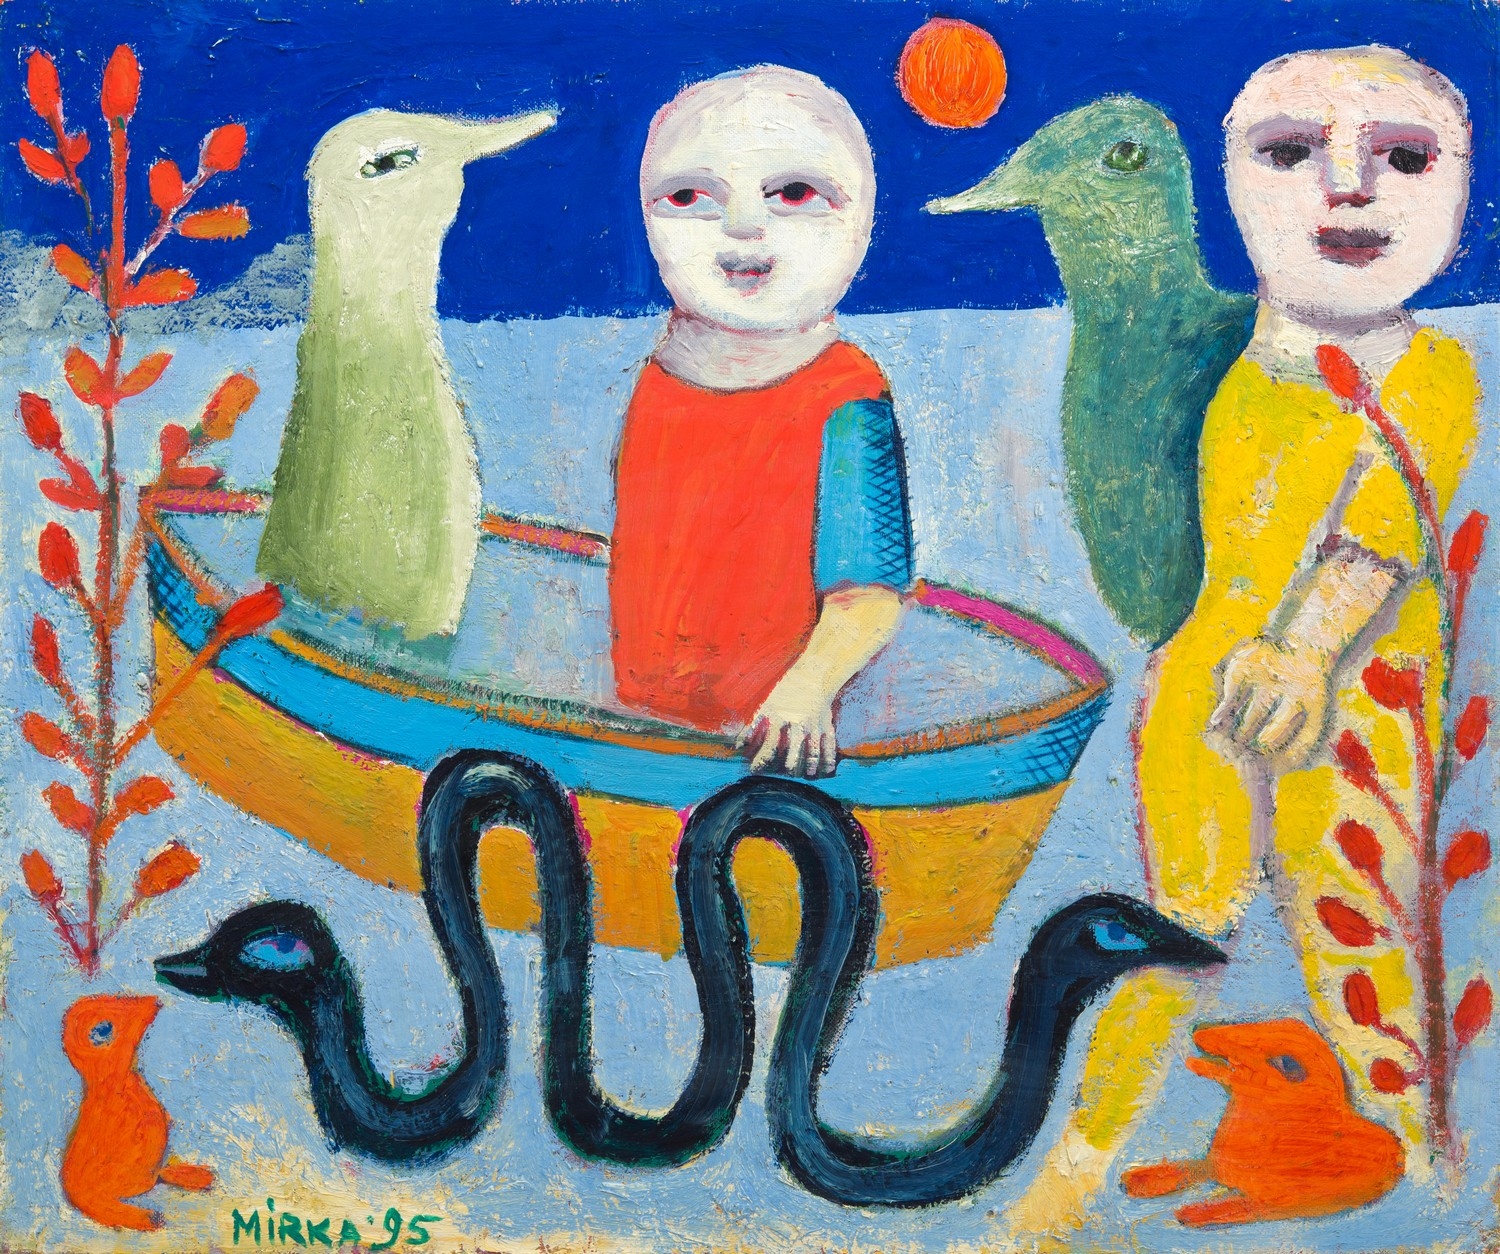 Children and Animals at Sea by Mirka Mora, 1995